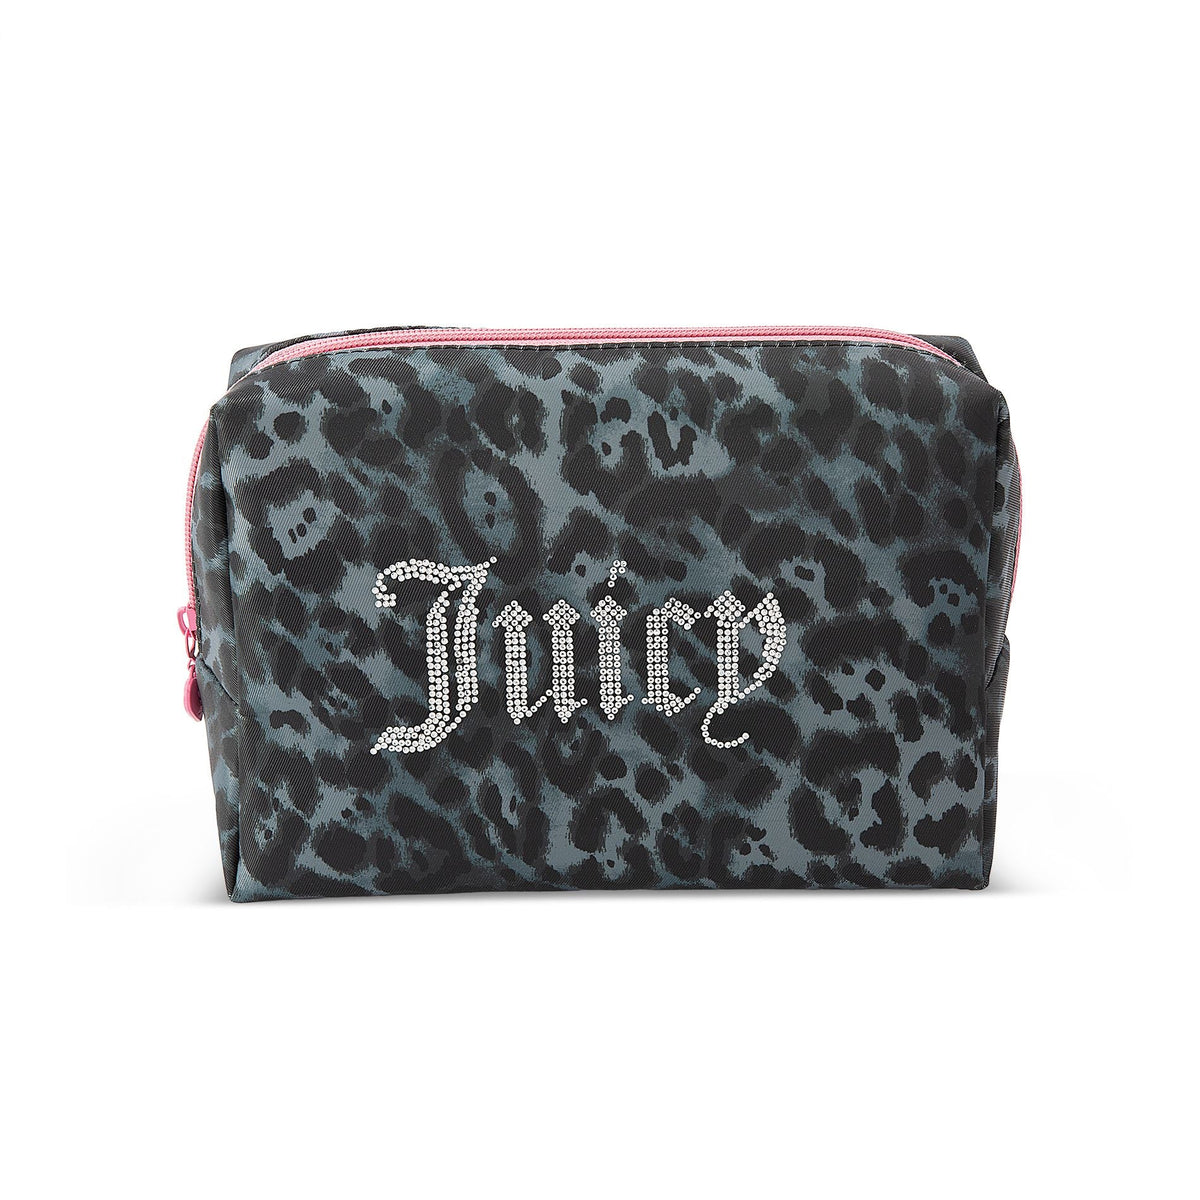 Juicy Couture Wedge Makeup Bag Grey Leopard